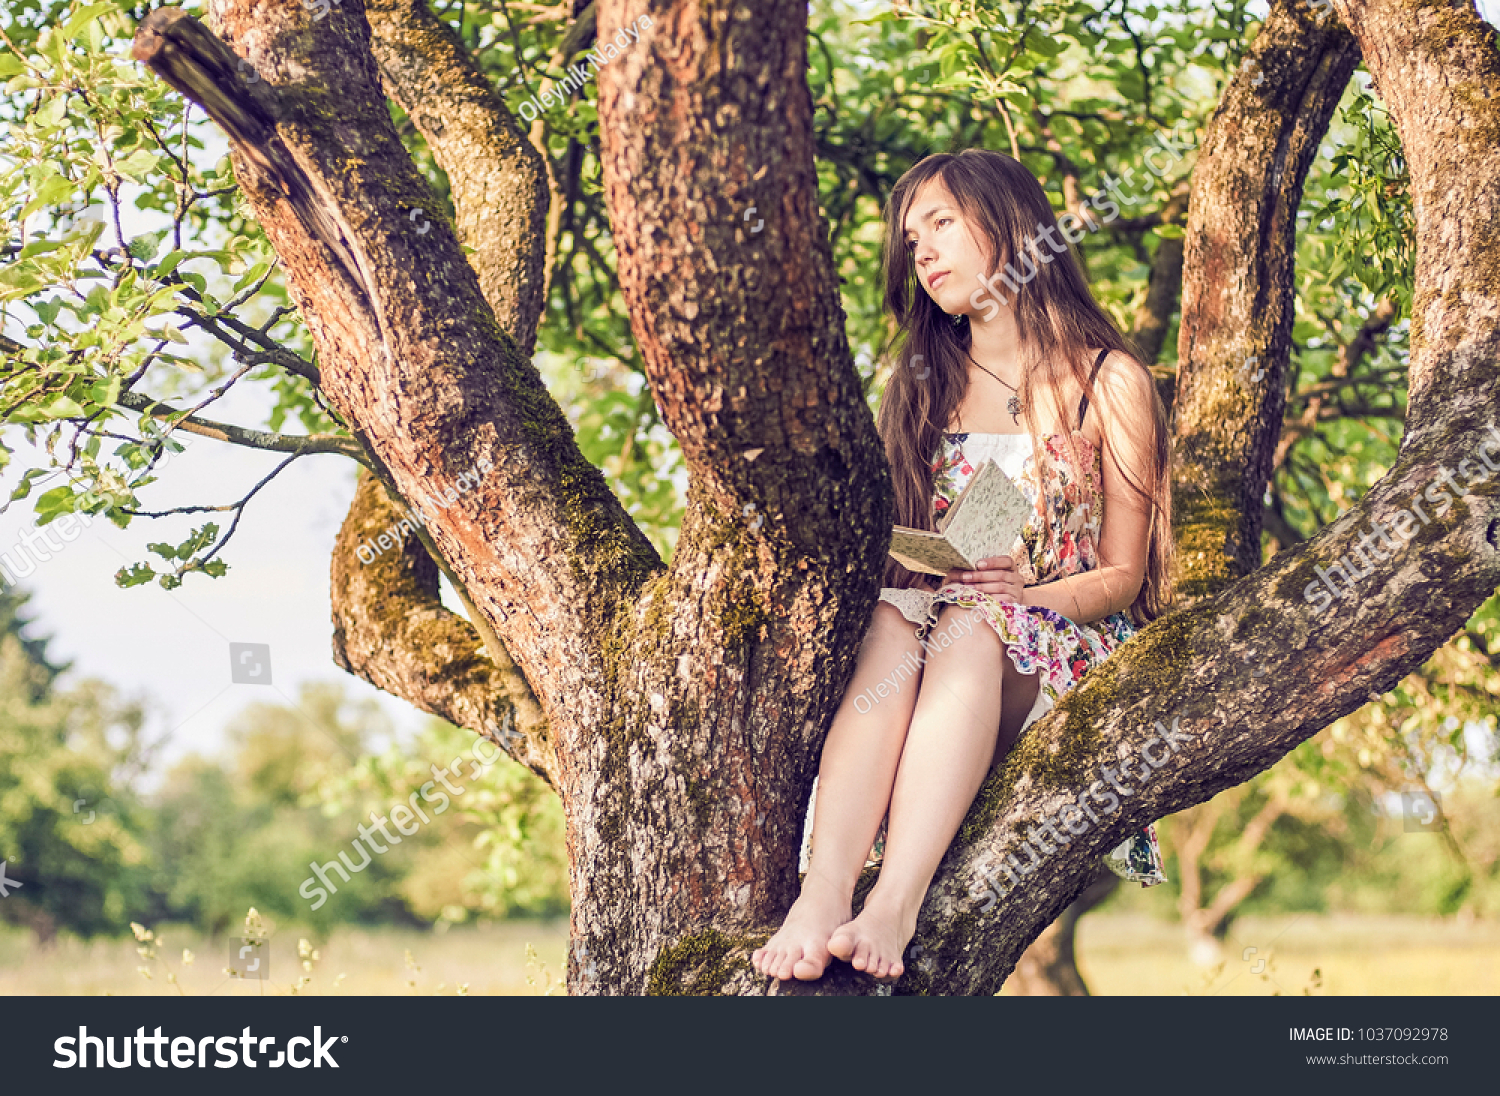 https://image.shutterstock.com/z/stock-photo-beautiful-romantic-girl-on-tree-with-book-1037092978.jpg